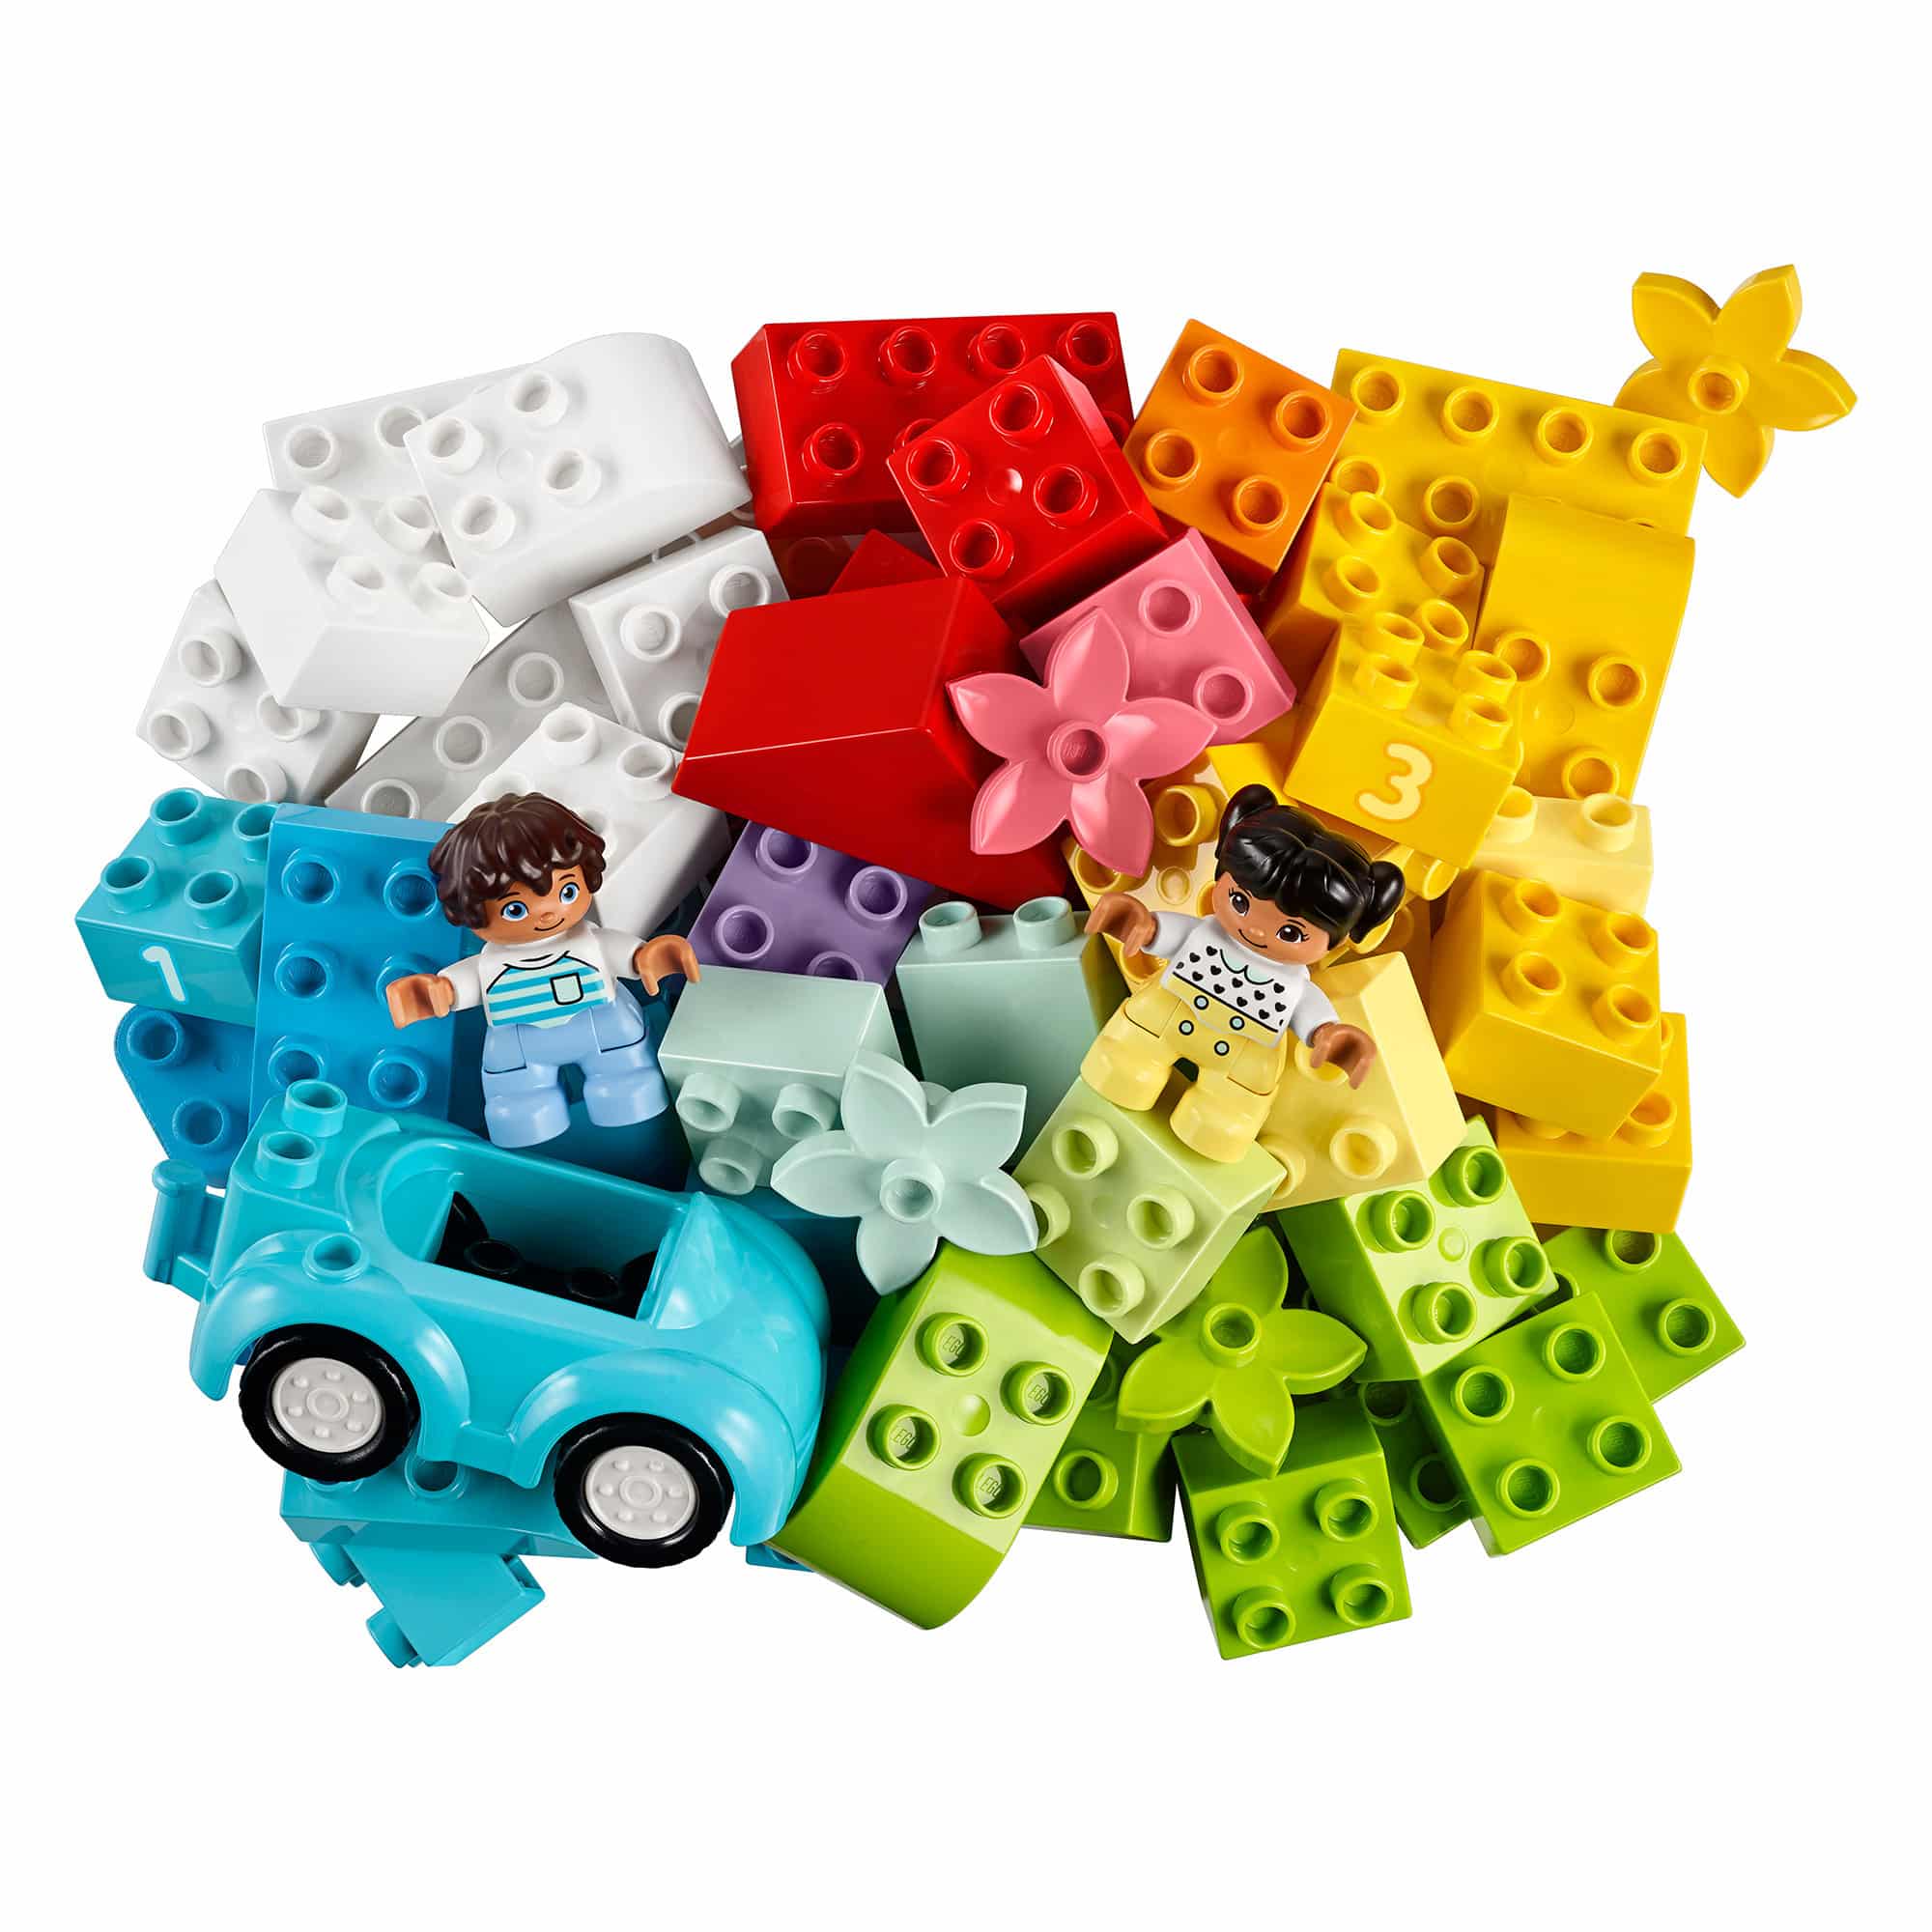 LEGO DUPLO 10913 - Brick Box